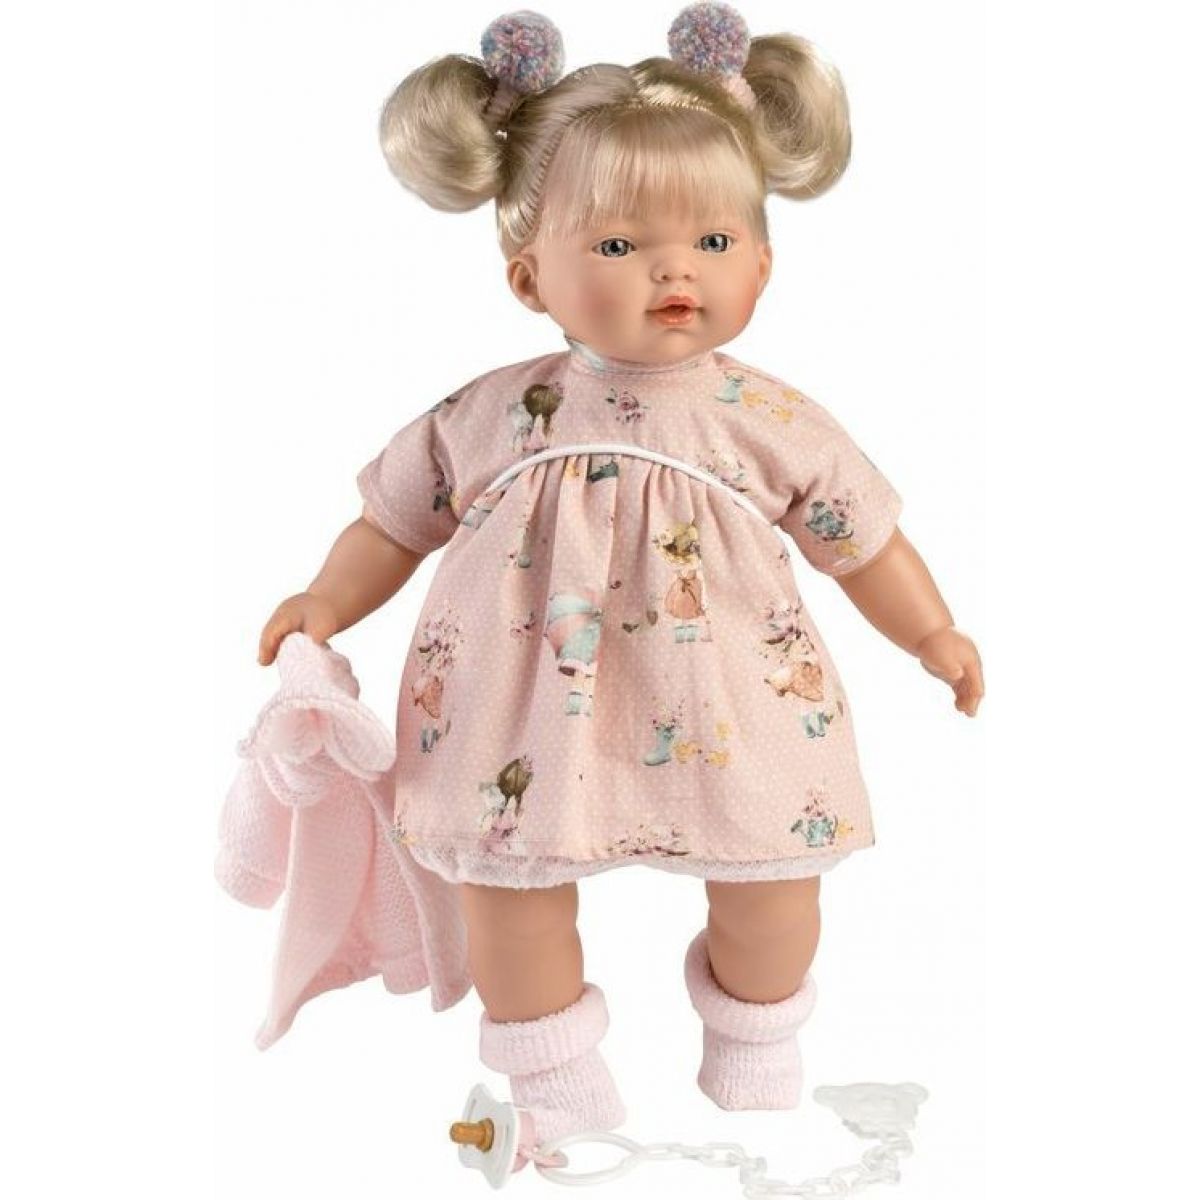 Roberta 33cm Crying Doll 33152